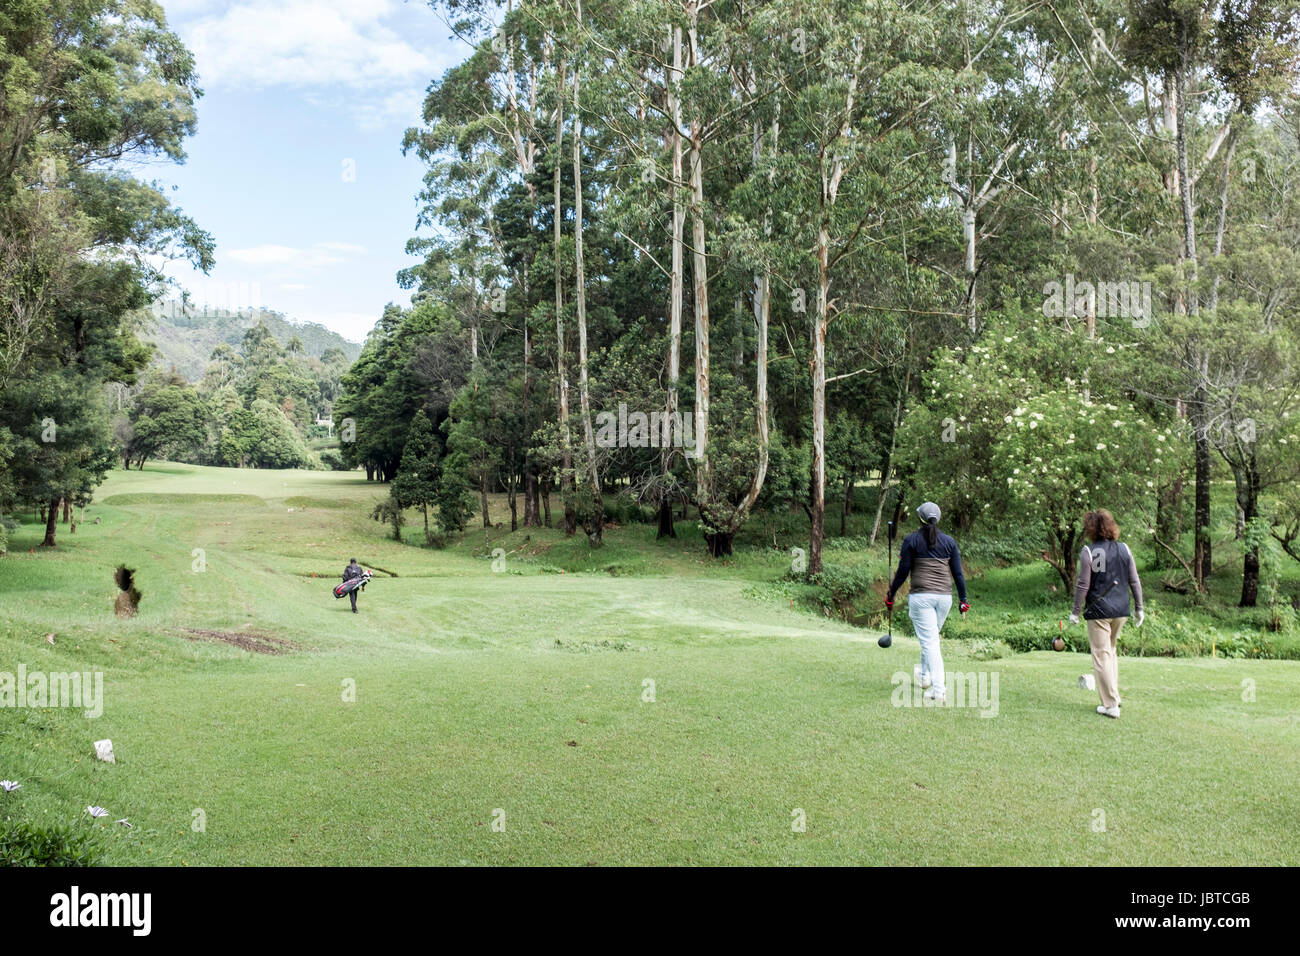 Players and caddies on the golf course at Nuwara Eliya, Sri Lanka Stock Photo